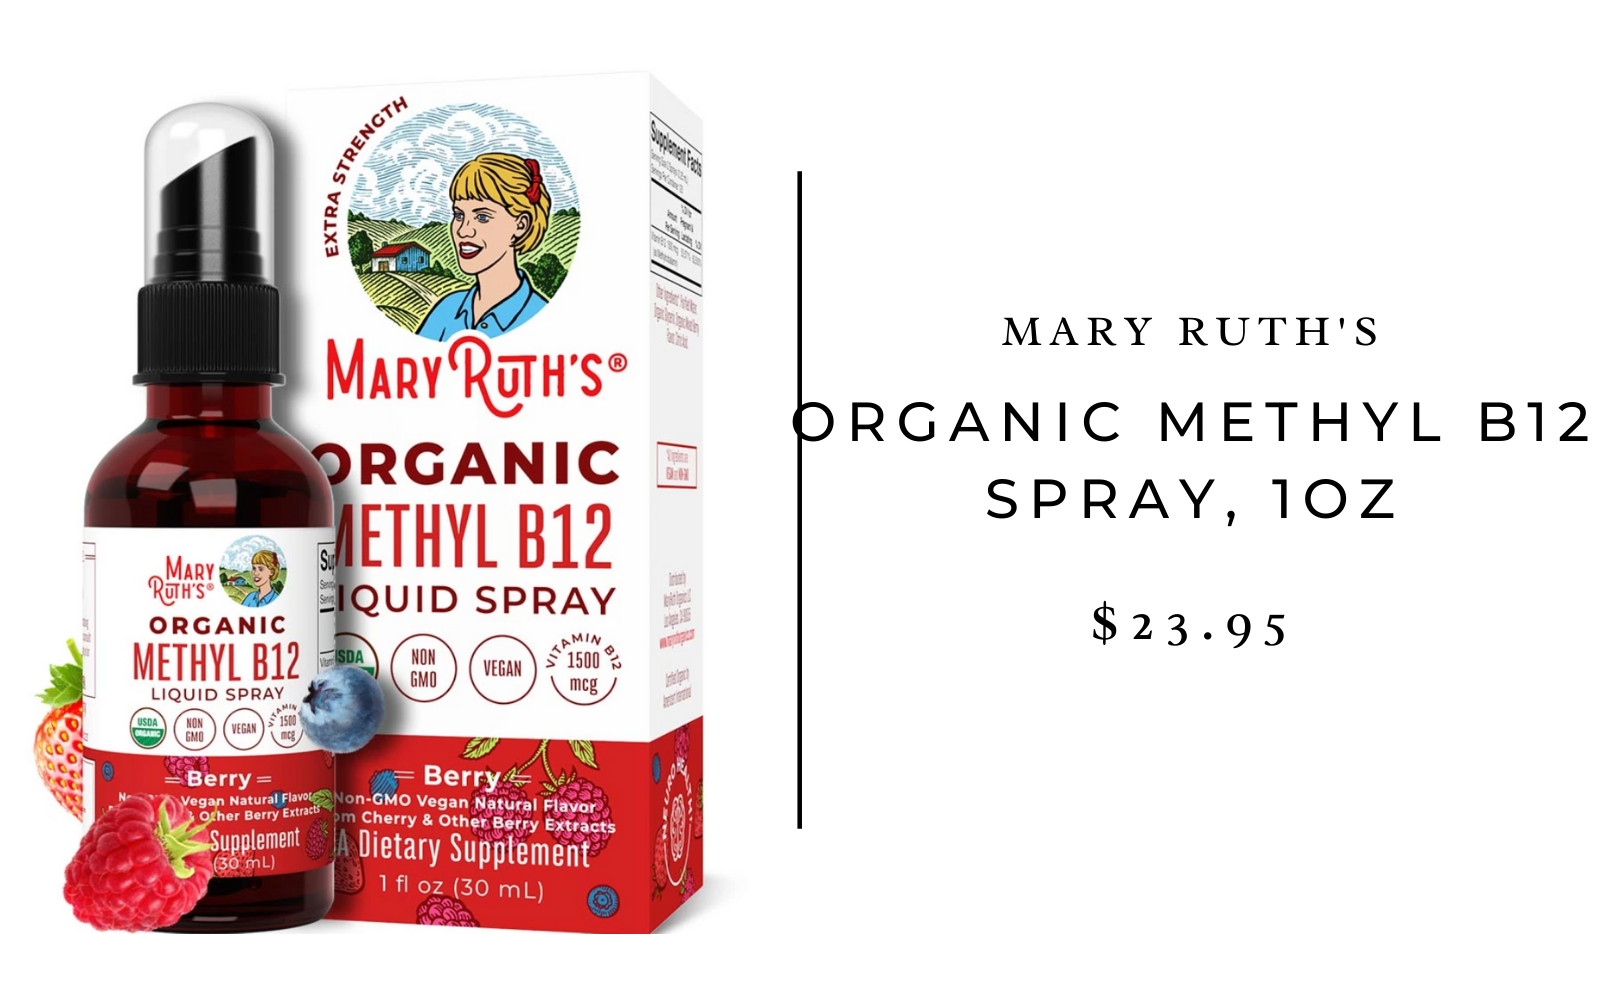 Mary Ruth’s Organic Methyl B12 Spray (1oz)